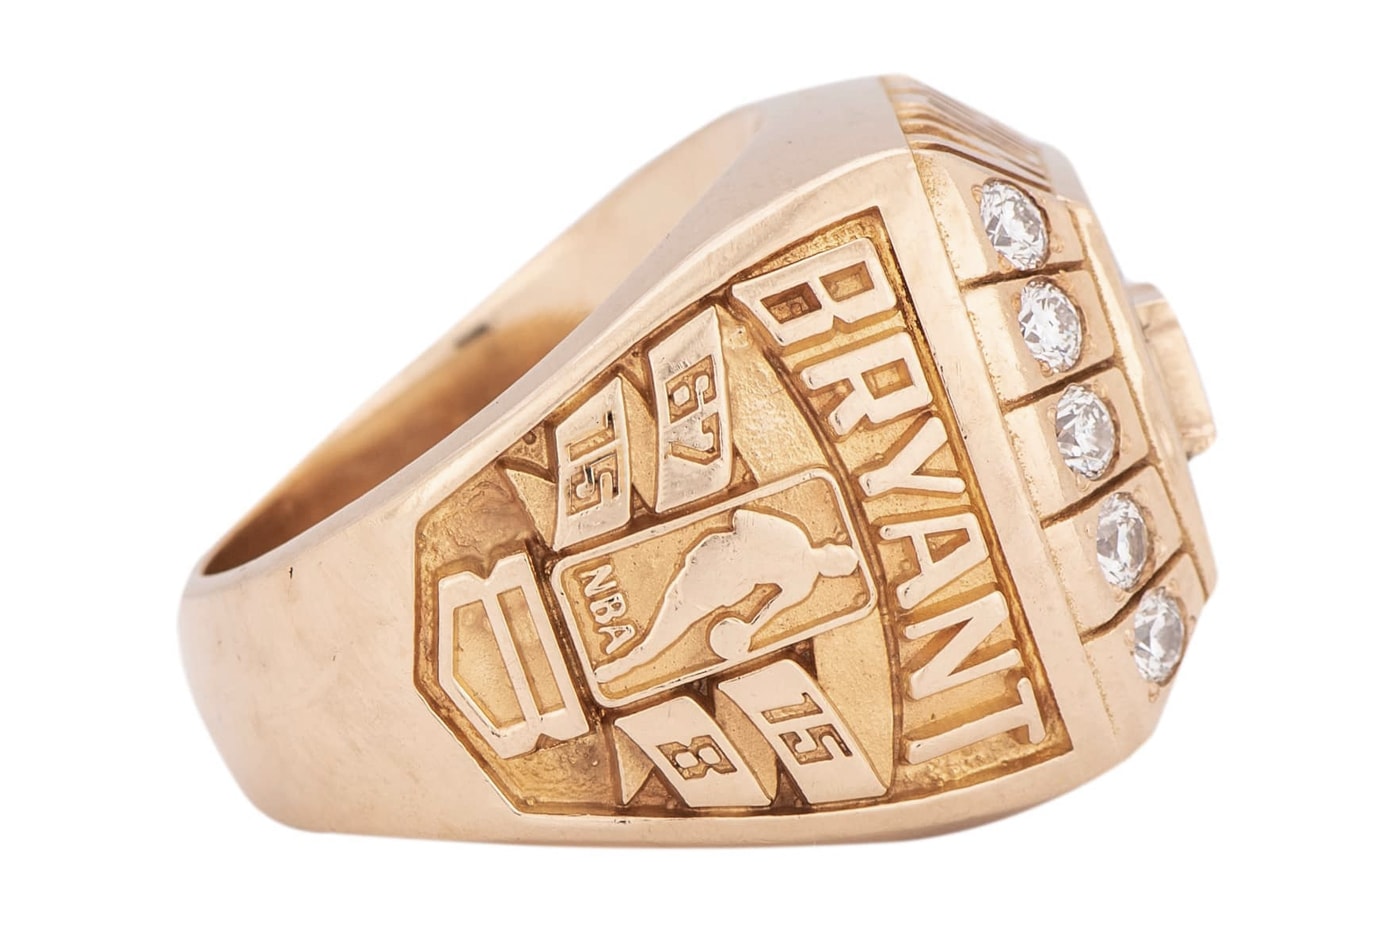 Kobe Bryant's 2000 NBA Championship Ring Sells for Nearly $1 Million USD 927,000 surpasses bill russells 1957 championship ring joe bean los angeles lakers la goldin auctions